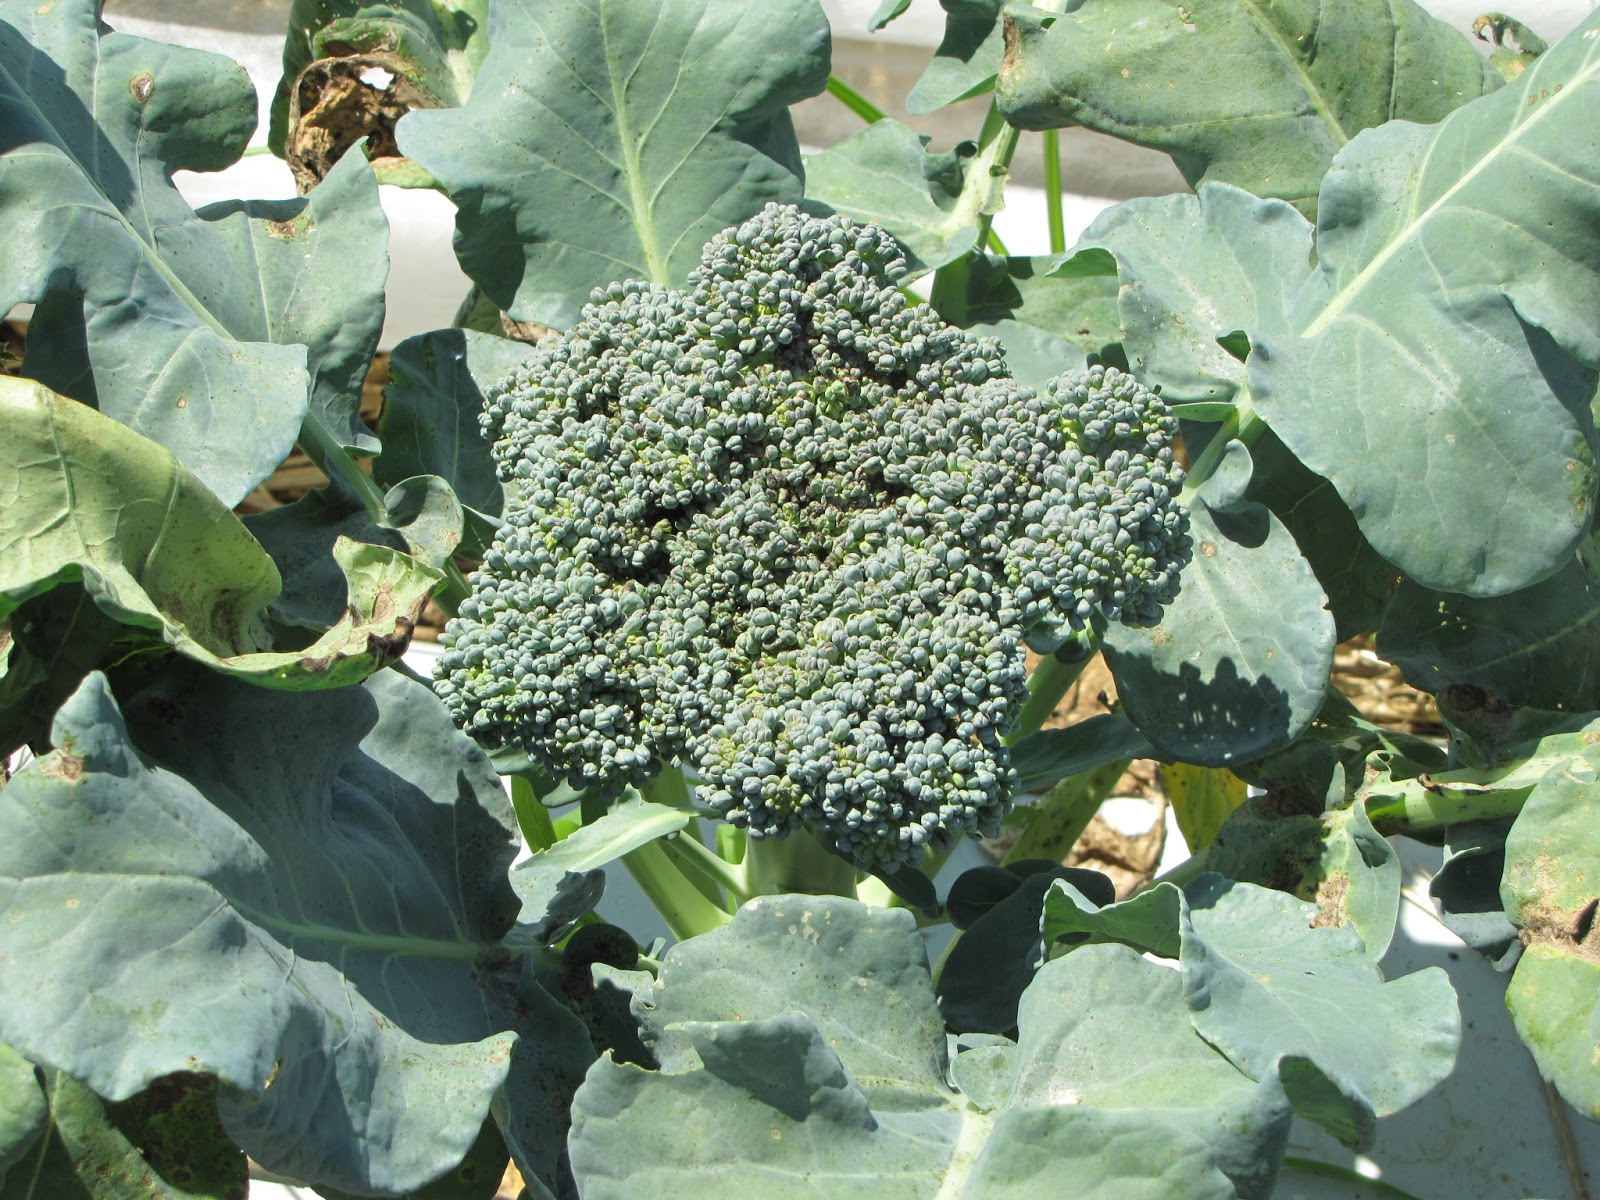 Umpqua broccoli grown in 2012